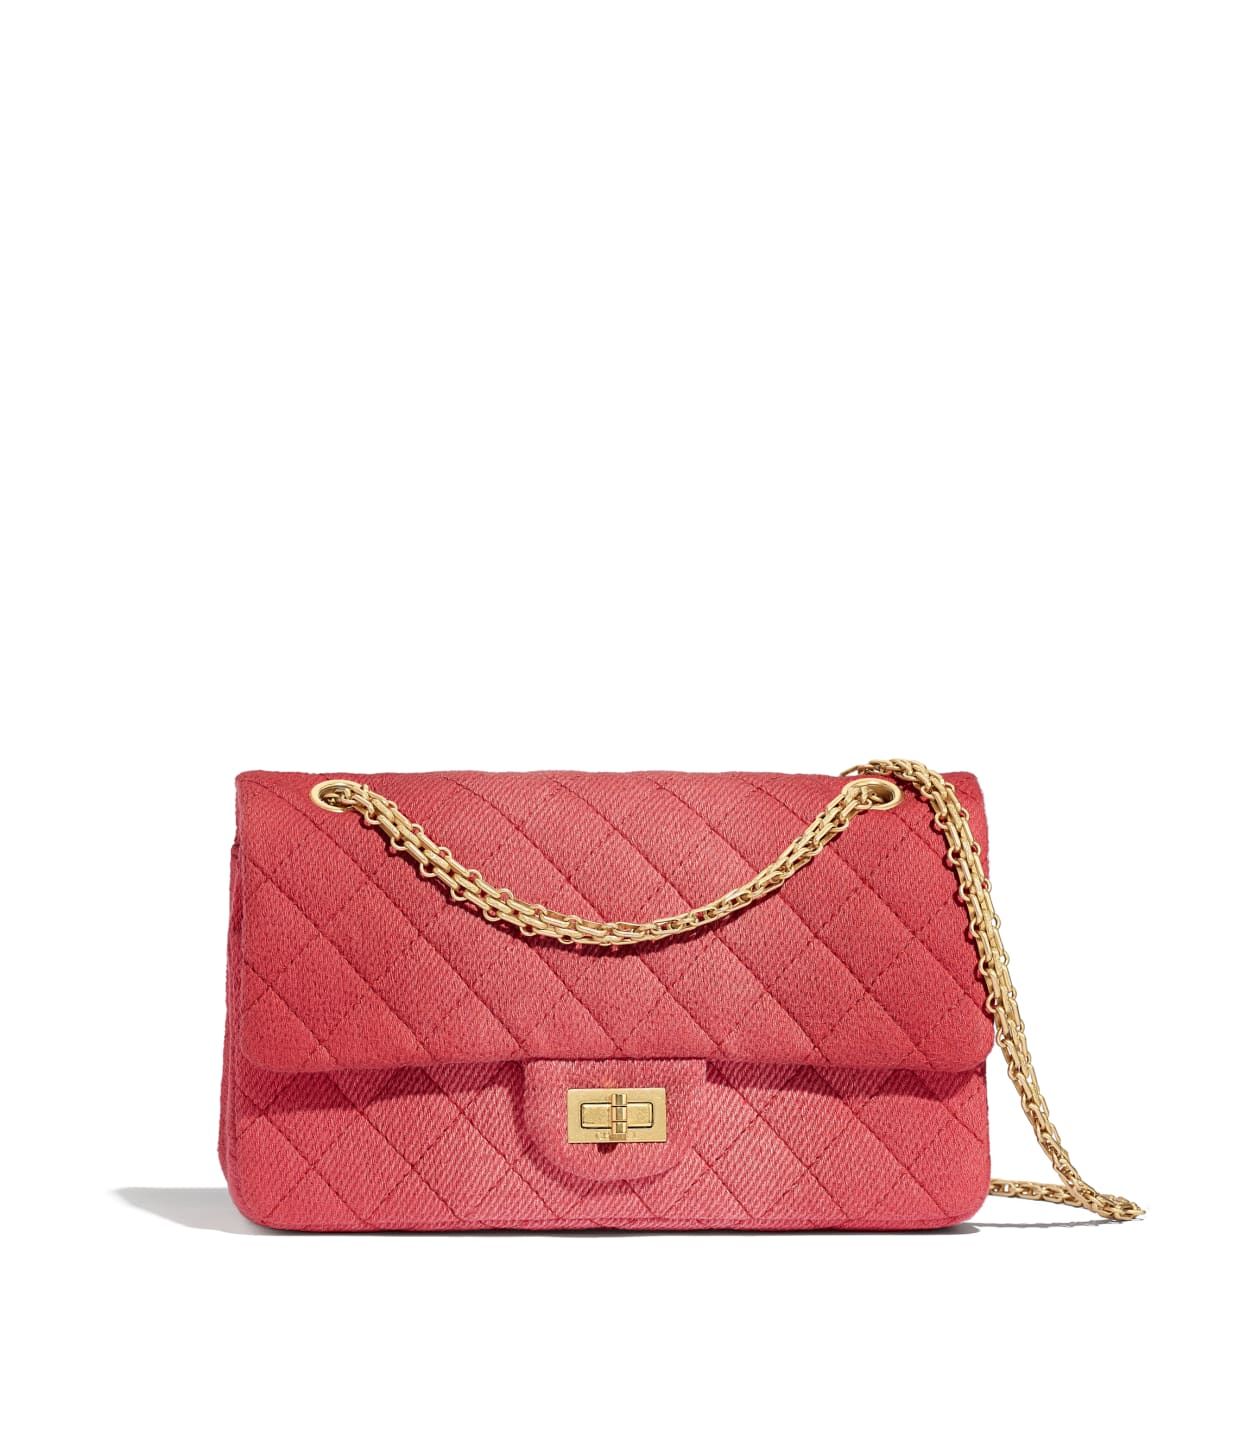 Denim & Gold-Tone Metal Coral 2.55 Handbag | CHANEL | Chanel, Inc. (US)